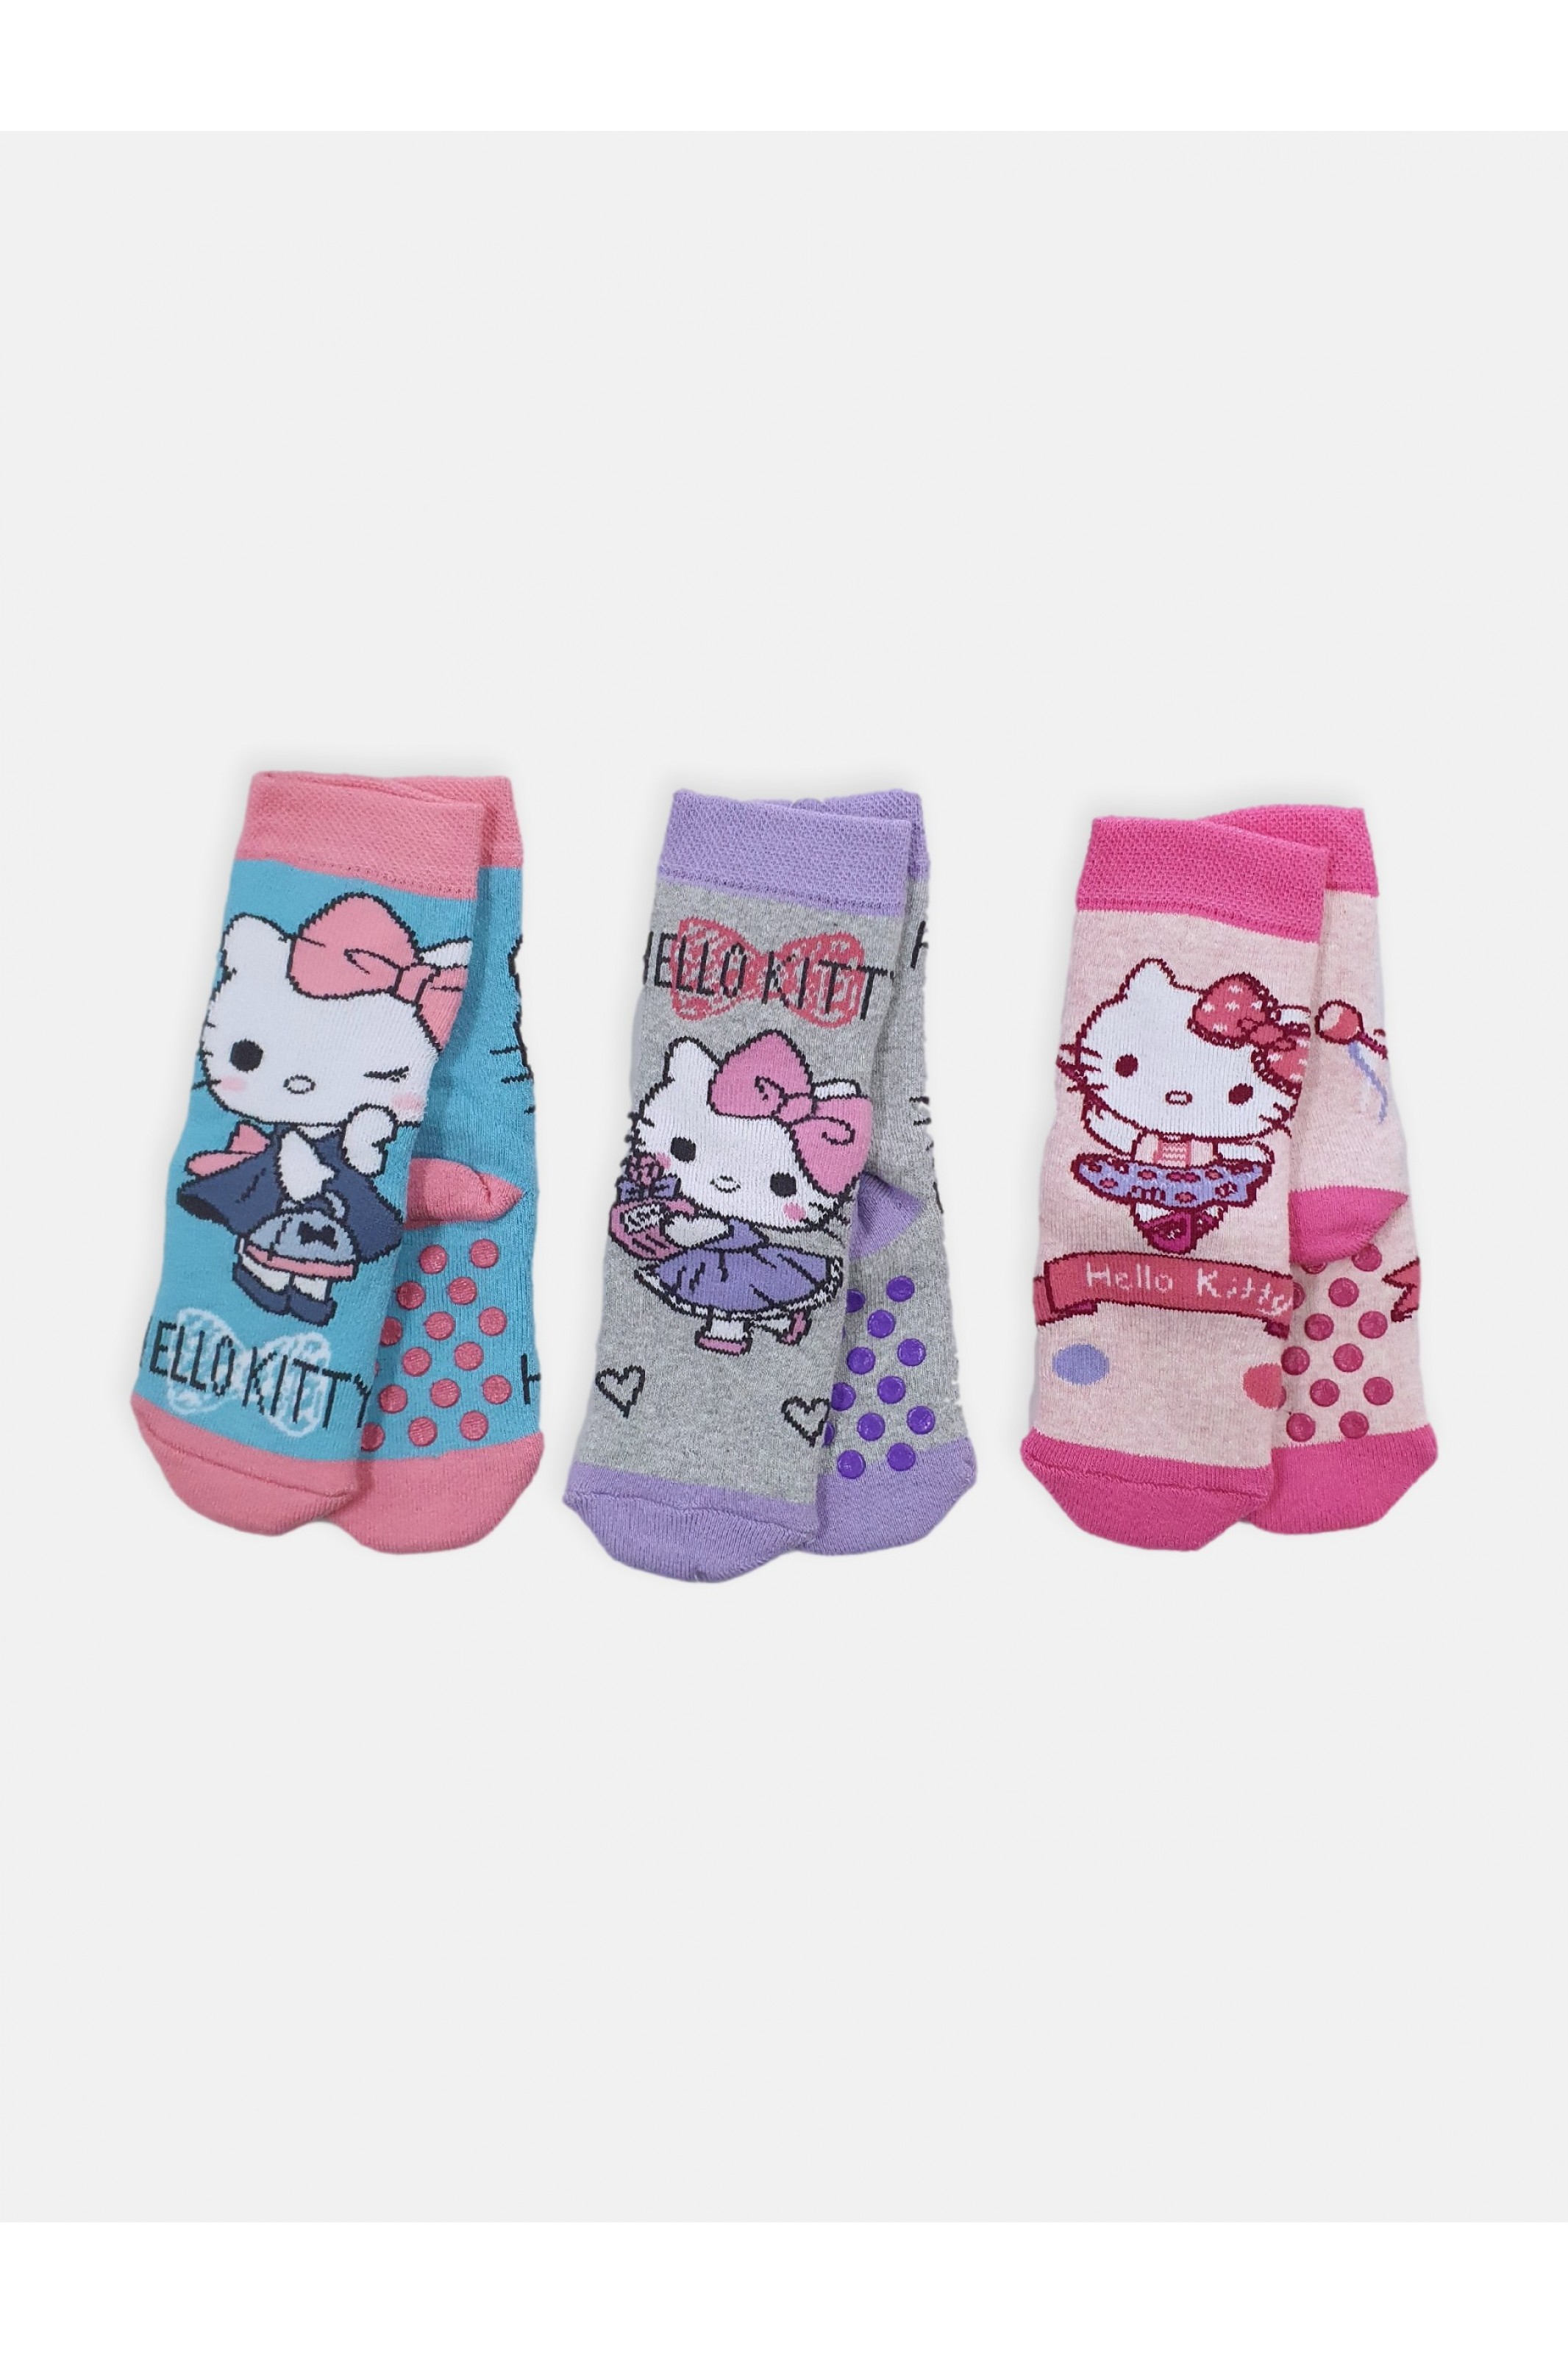 Kids DISNEY HELLO KITTY socks with suction cups 2021 - MoutakisWorld.com